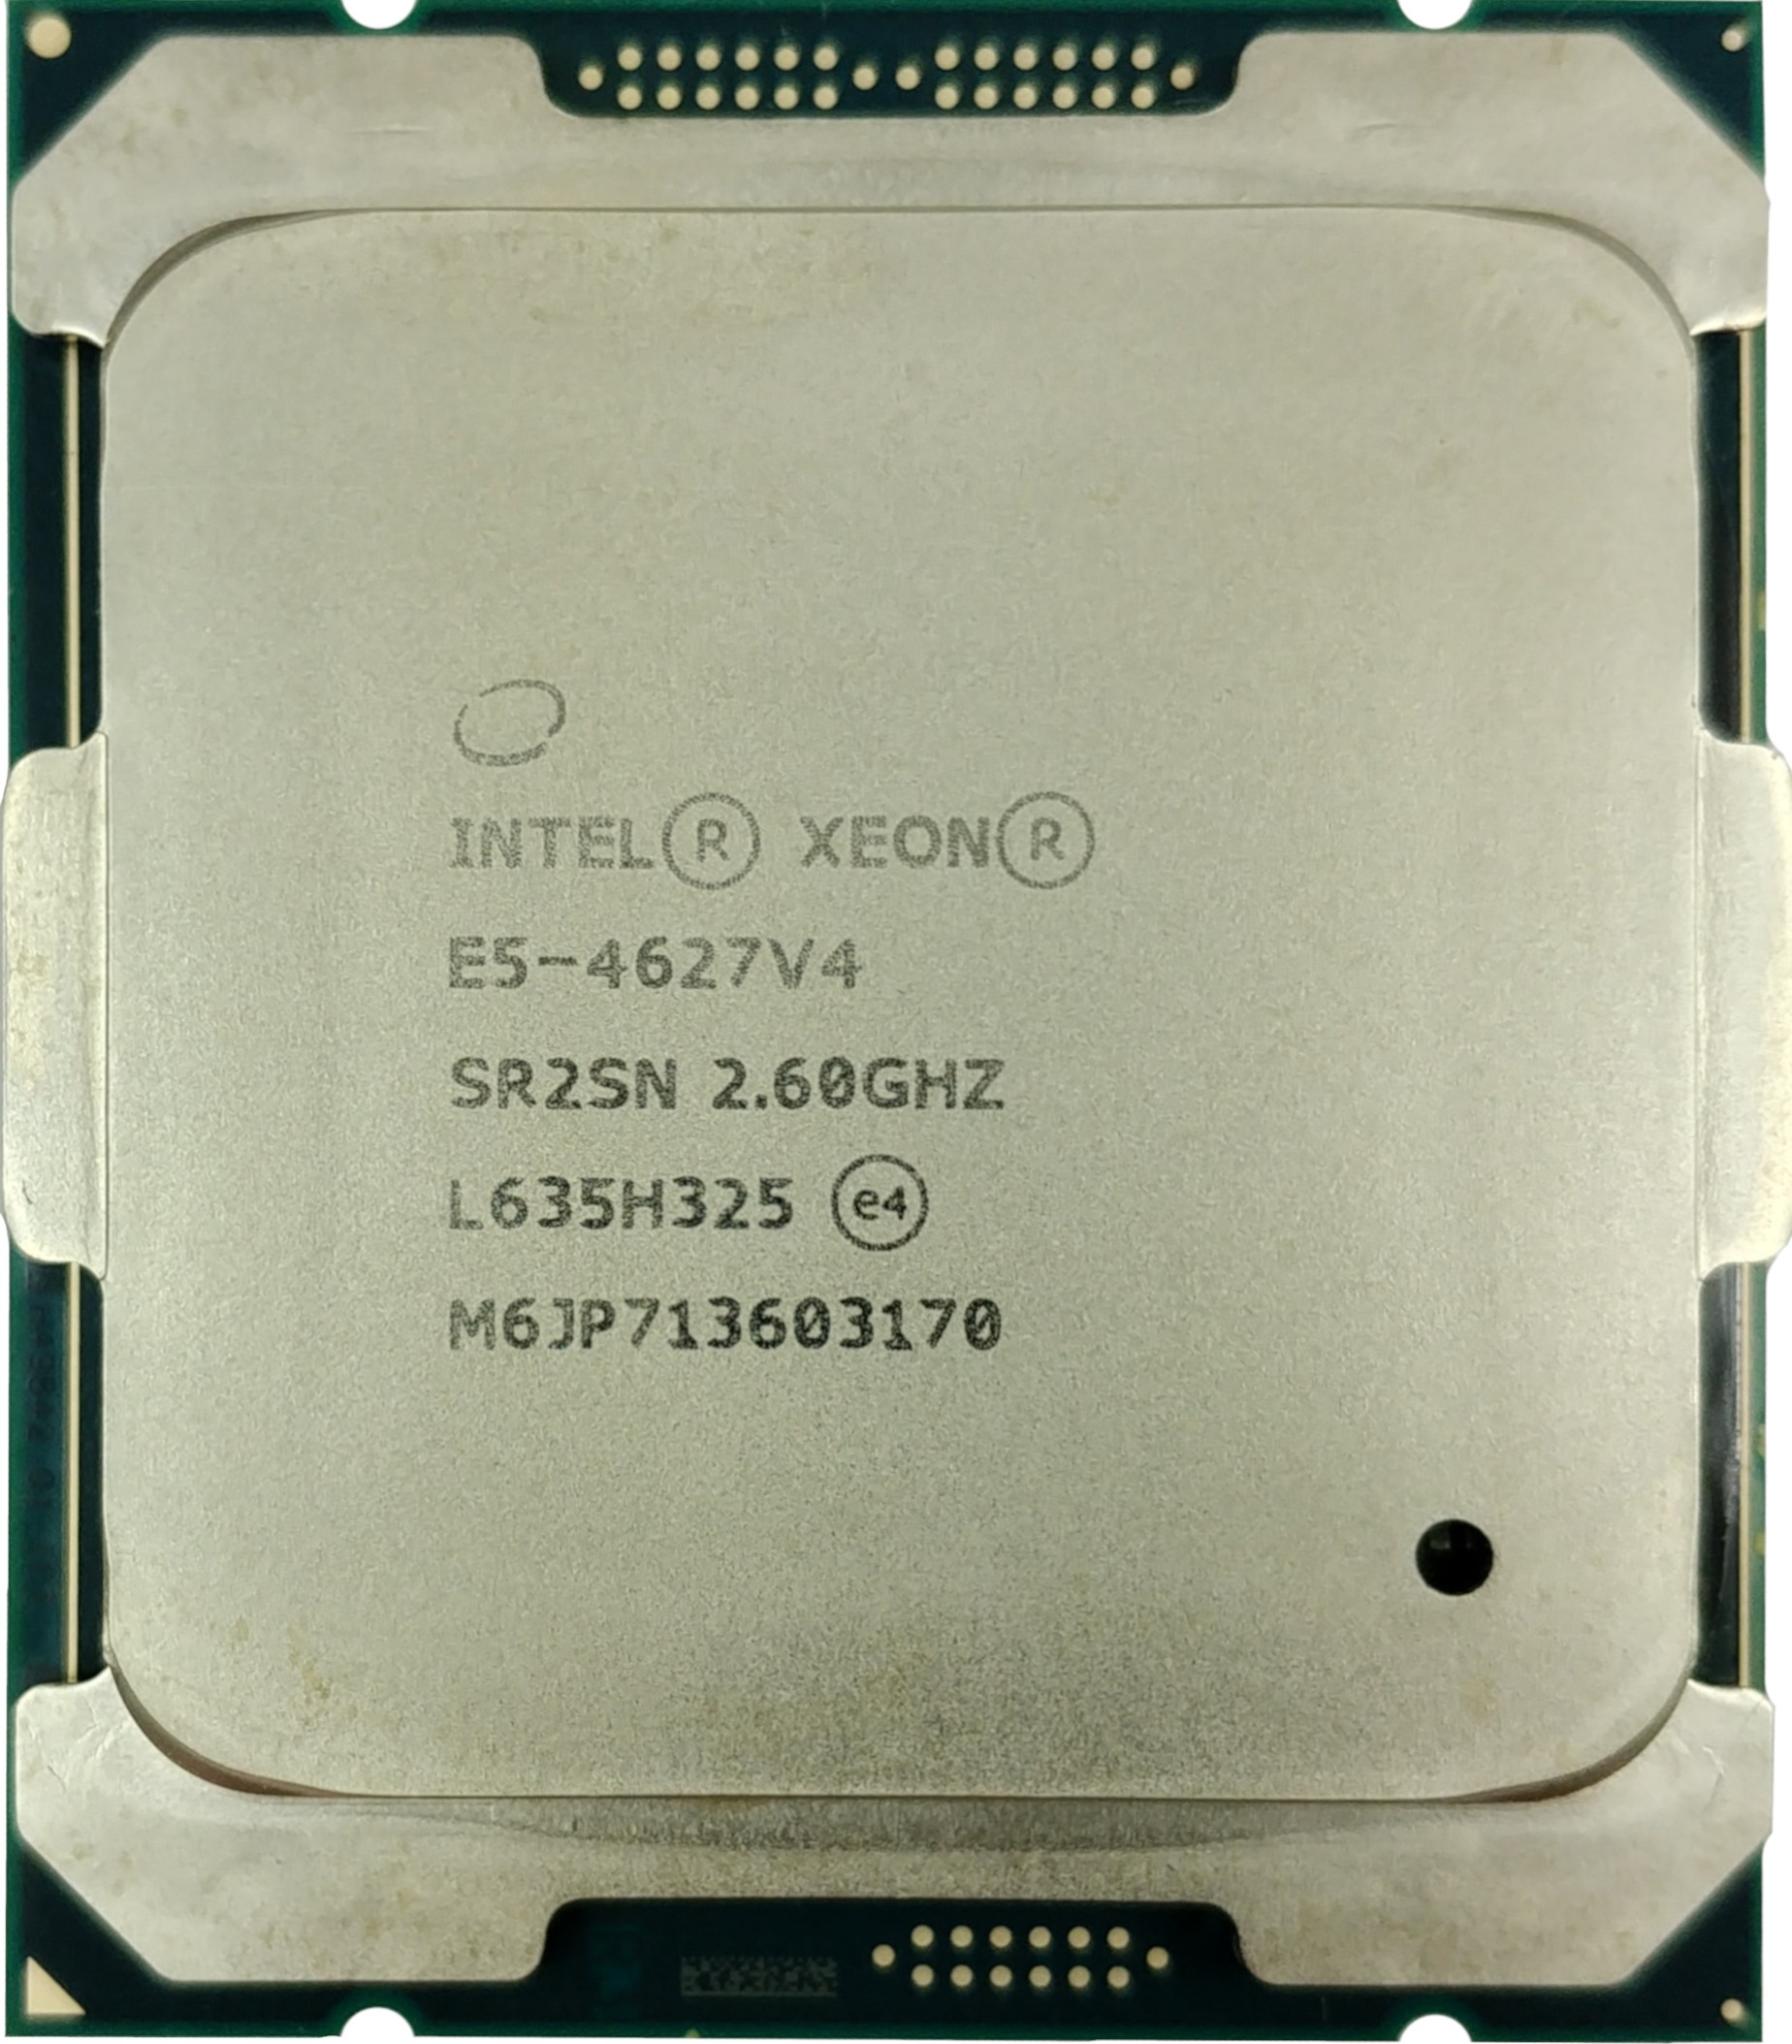 Intel Xeon E5-4627 V4 (SR2SN) 2.60GHz Ten (10) Core ...